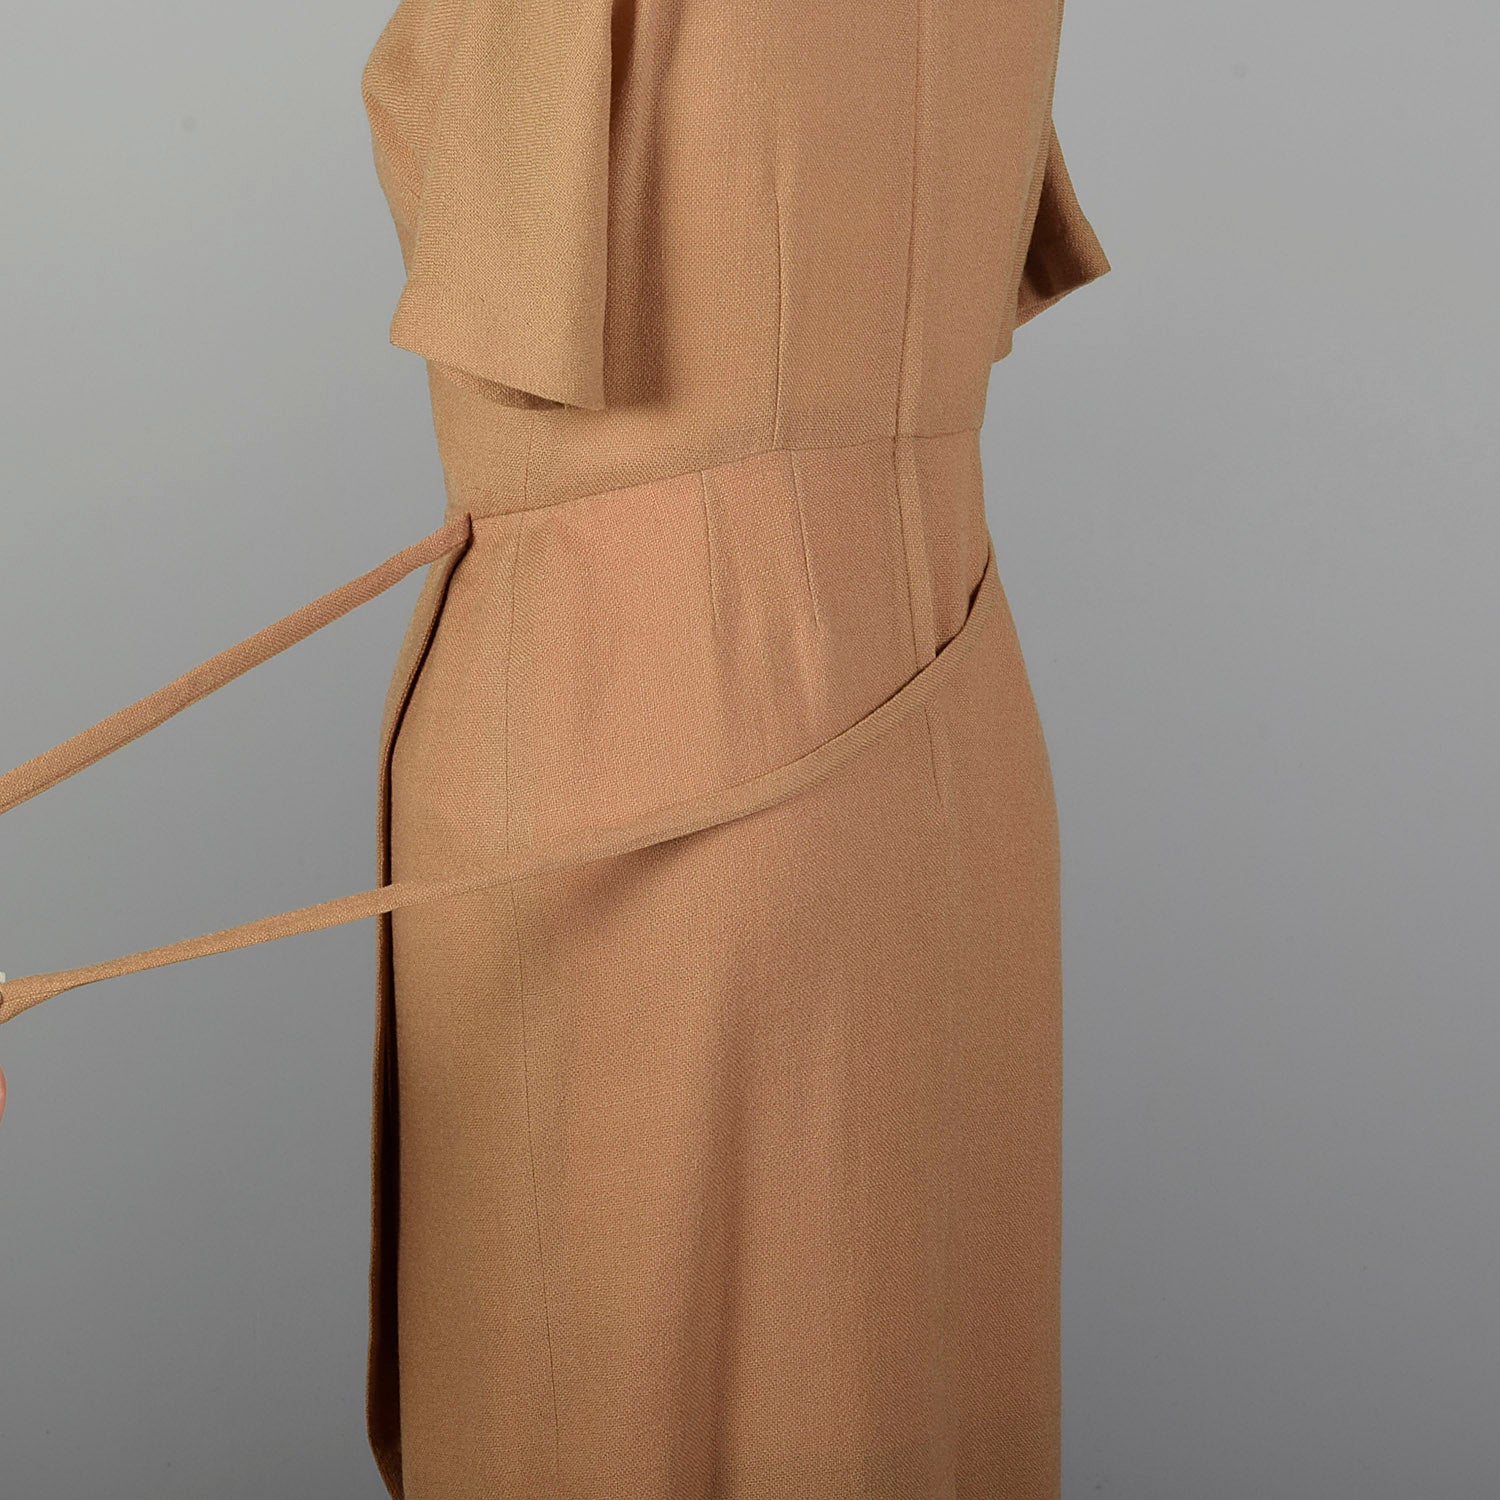 XL 1960s Tan Day Dress